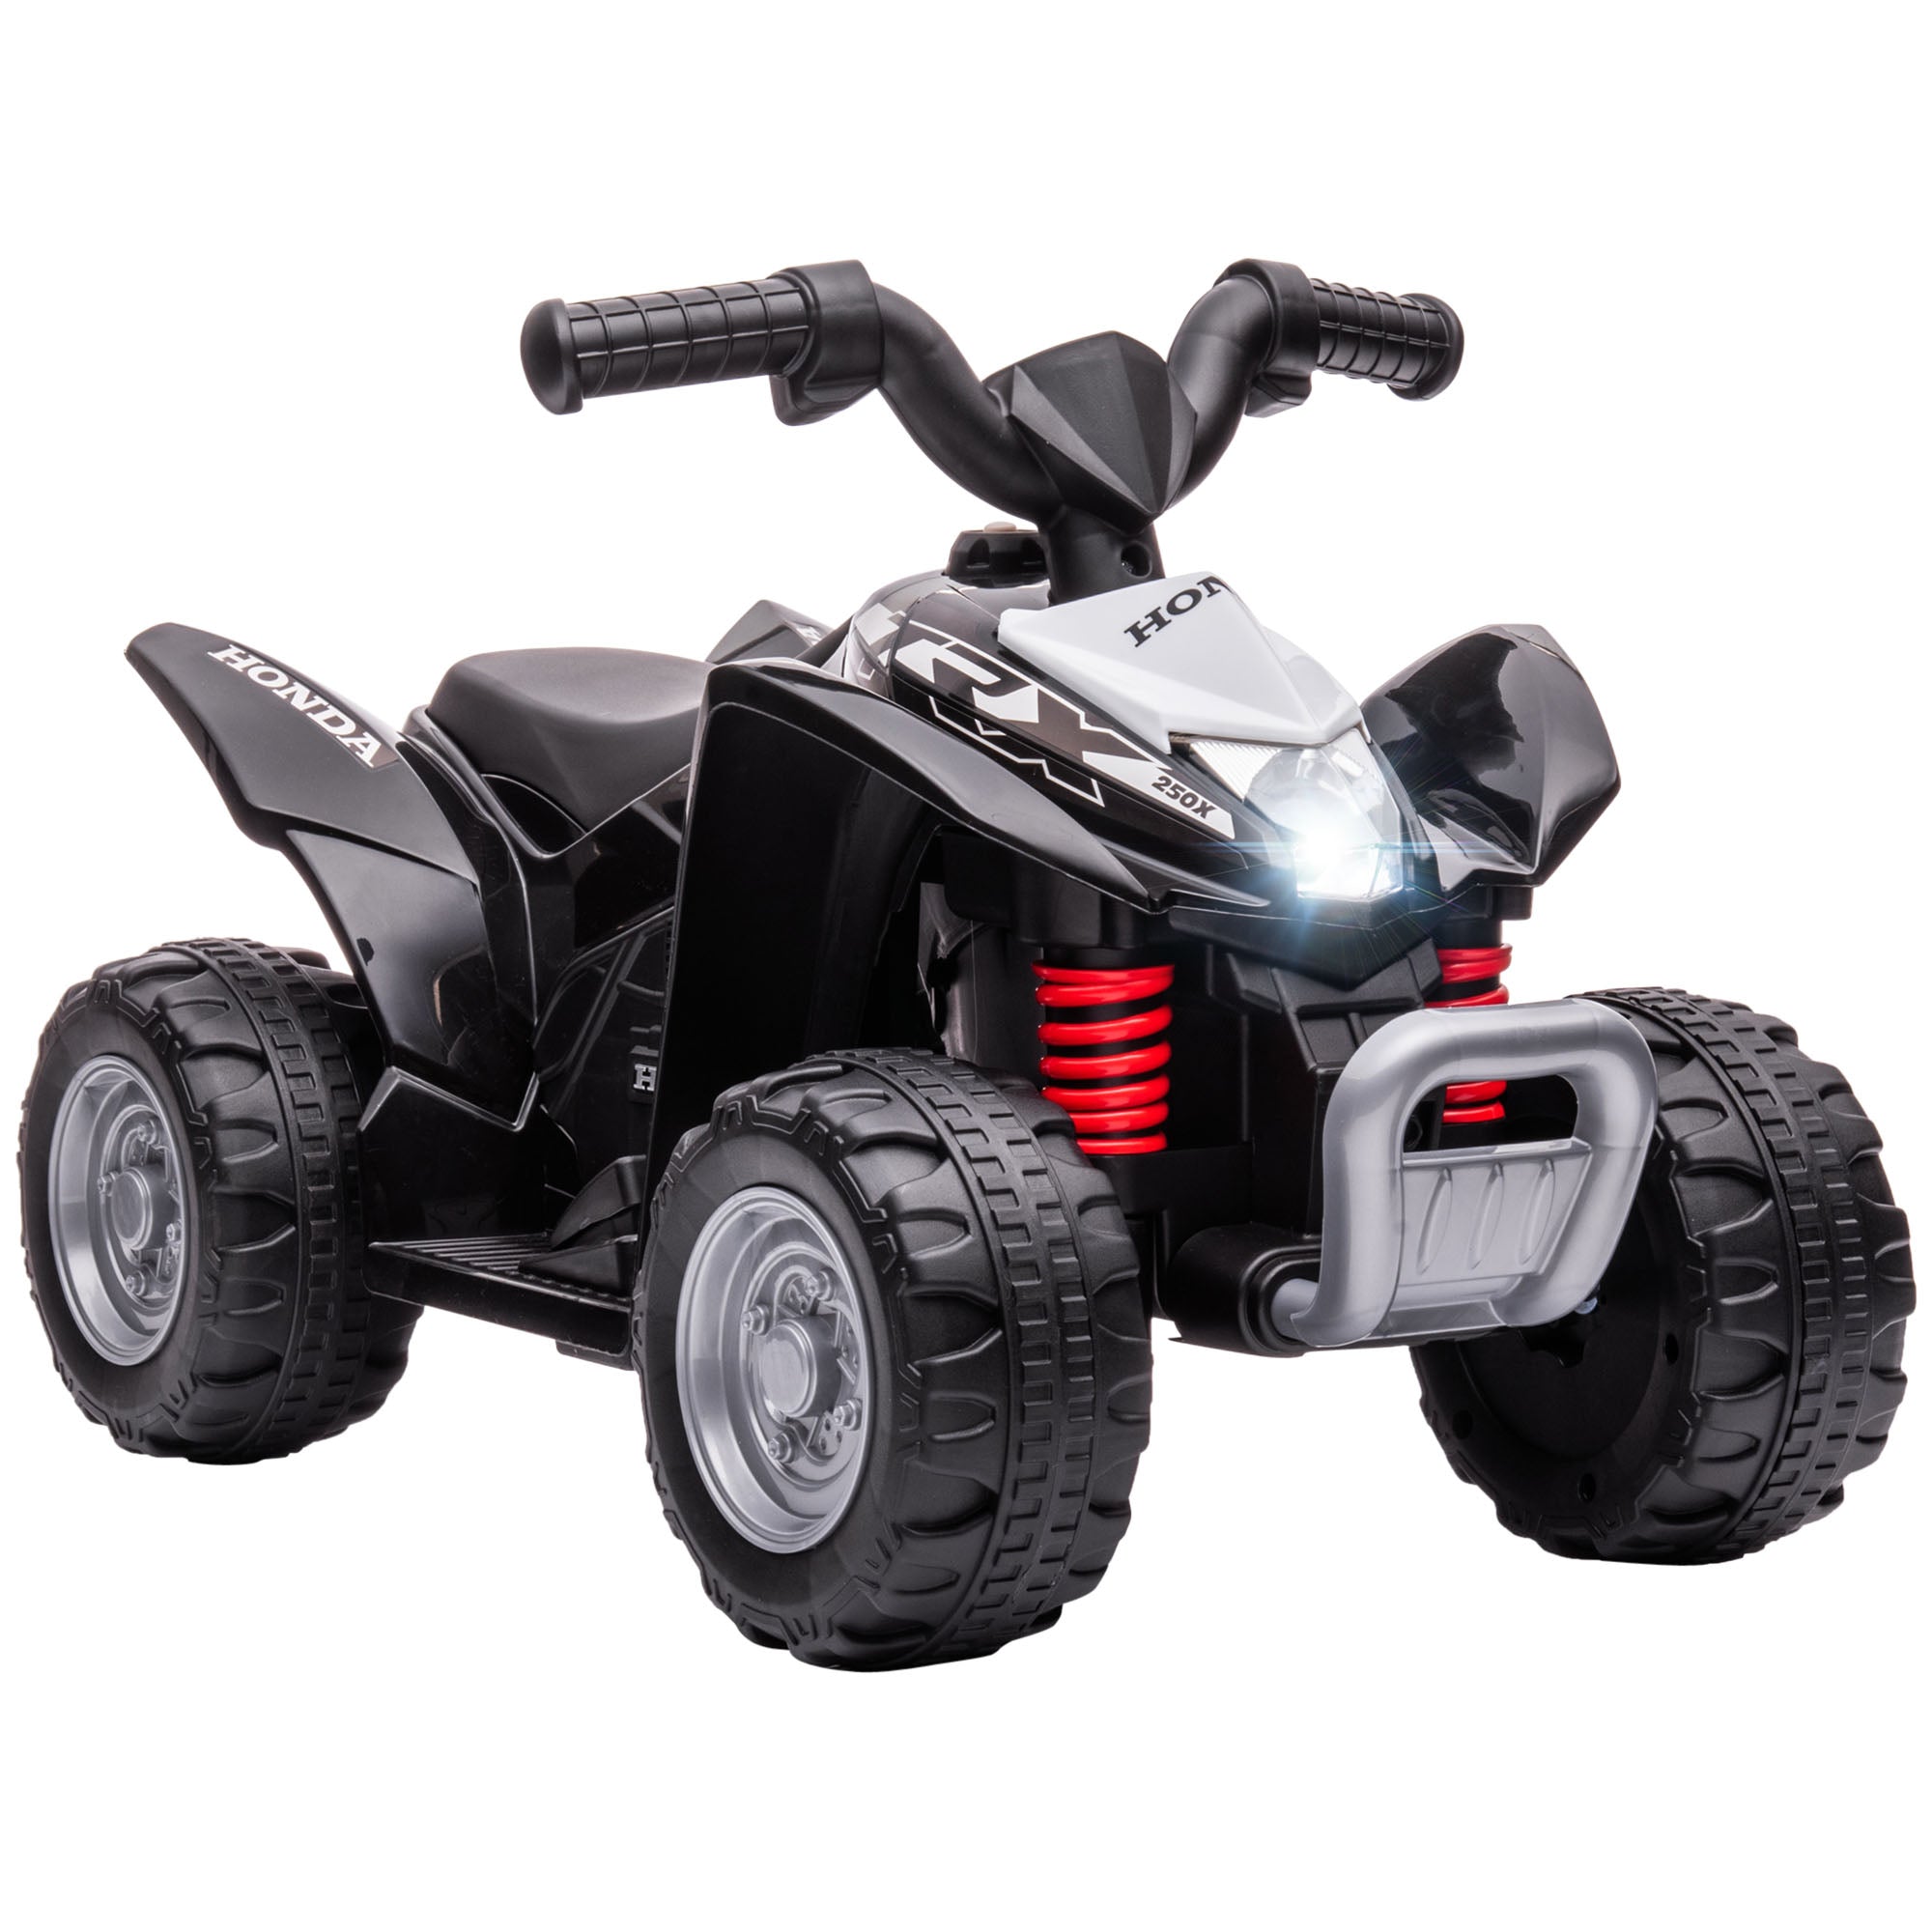 HOMCOM AIYAPLAY Honda Licensed 6V Electric Ride On Kids Toy ATV Quad Bike with LED Lights & Horn for 1.5-3 Years (Black)